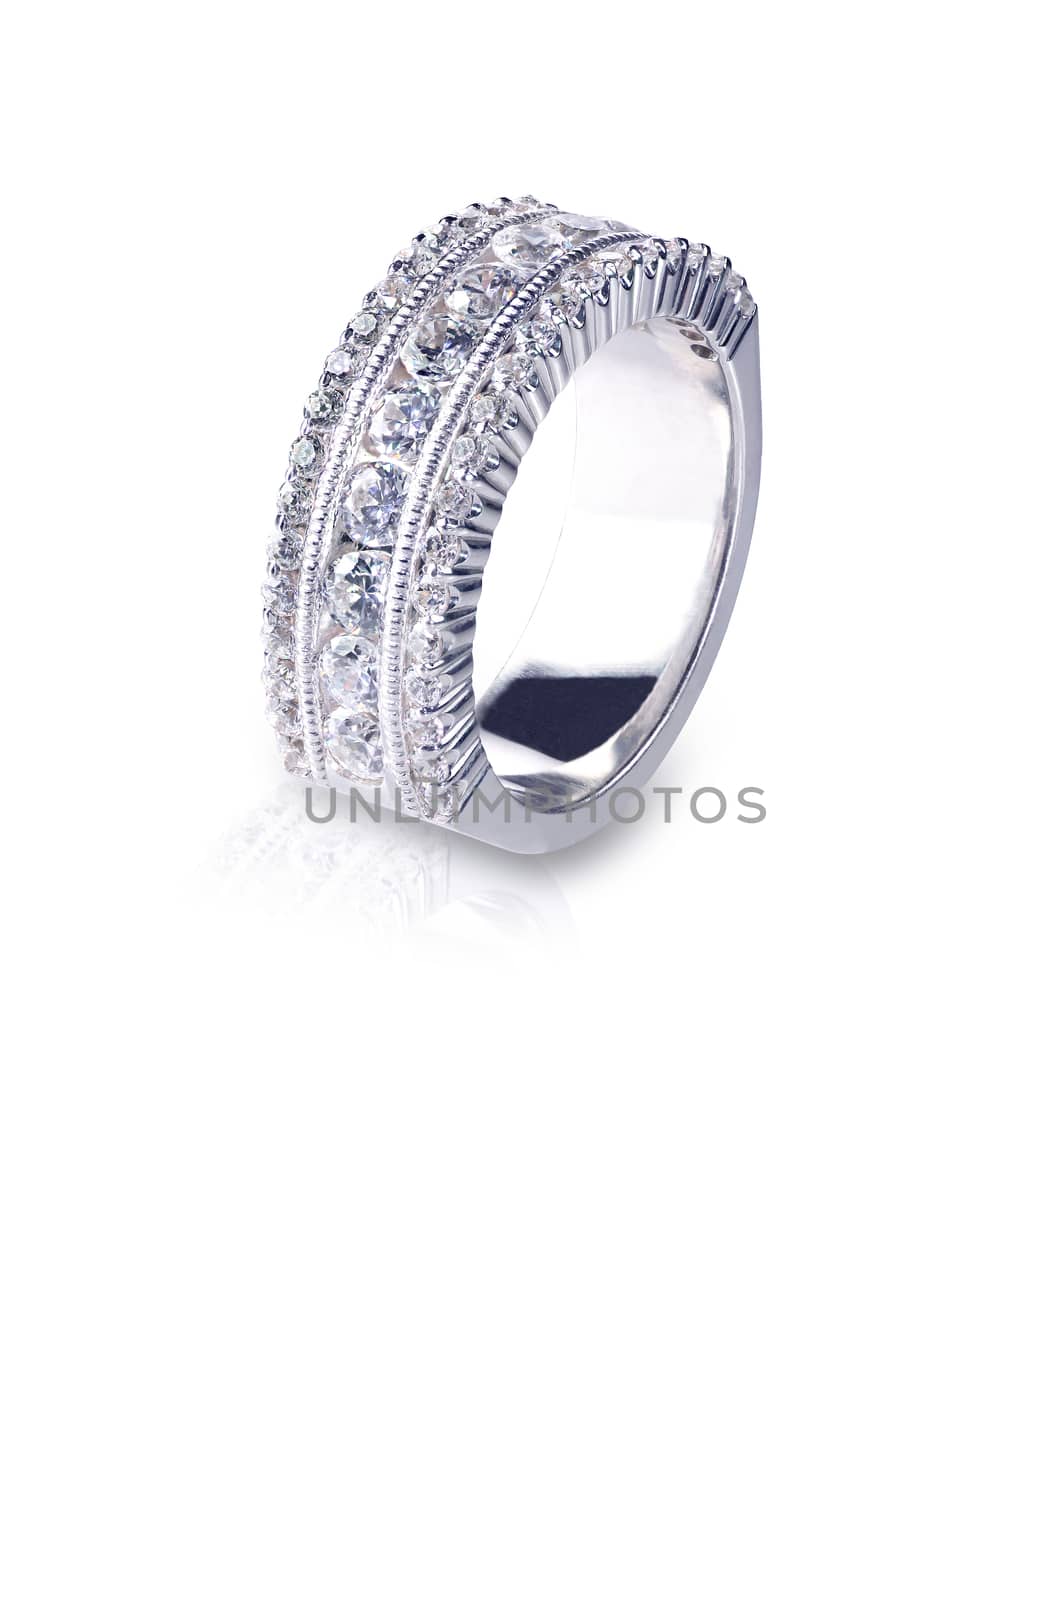 Beautiful diamond ring with diamonds set in gold. Fashion wedding or anniversary band.